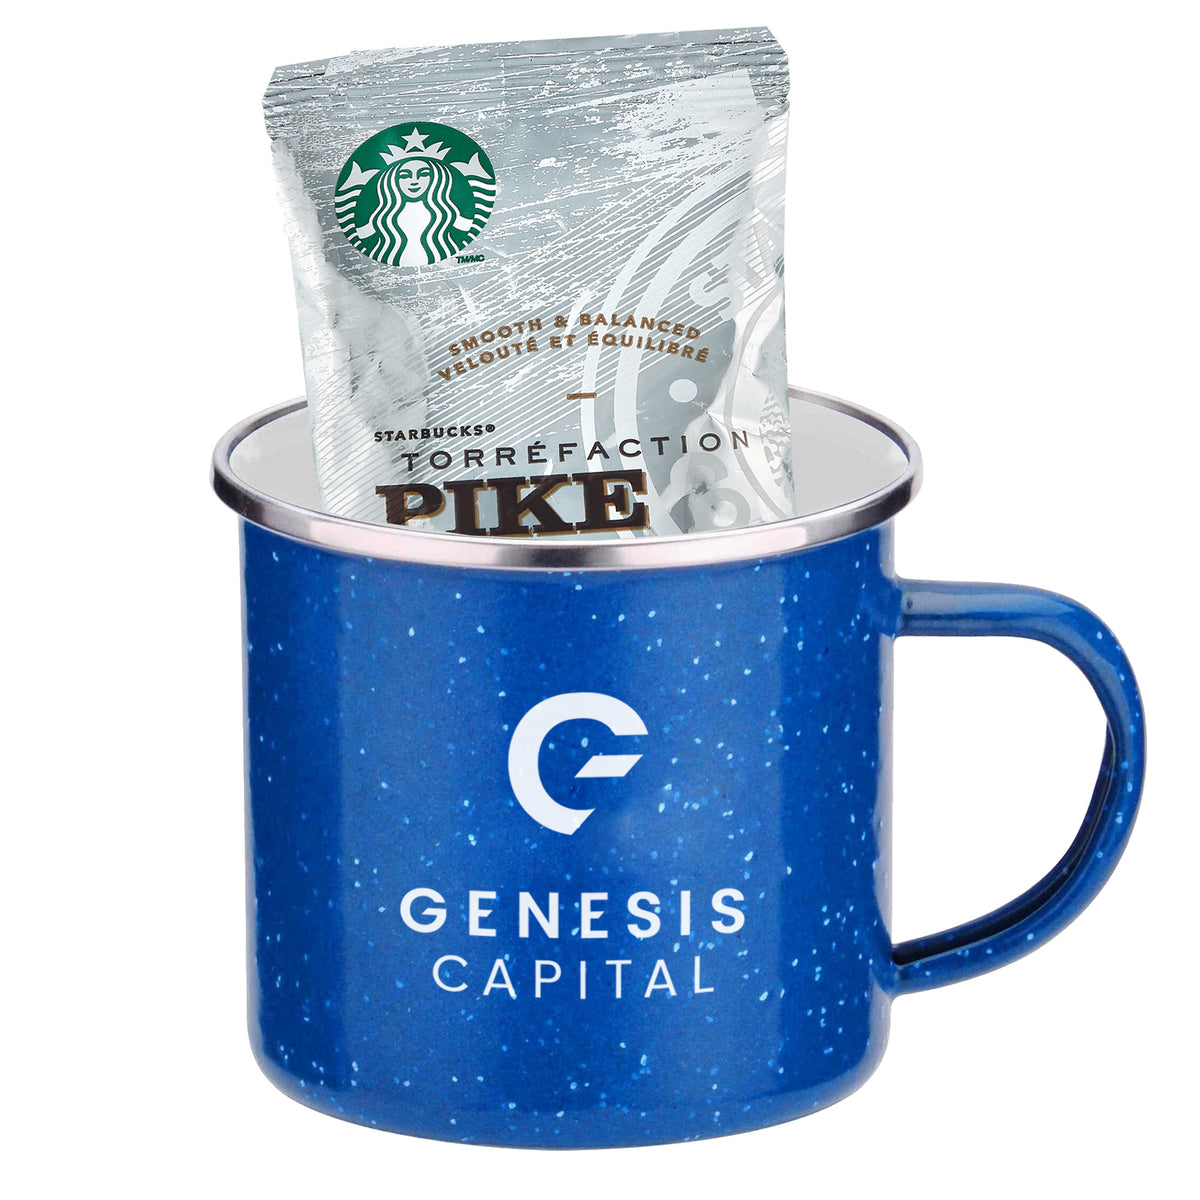 Speckled Camping Mug - 16 oz., Starbucks® Pike Place Ground Coffee